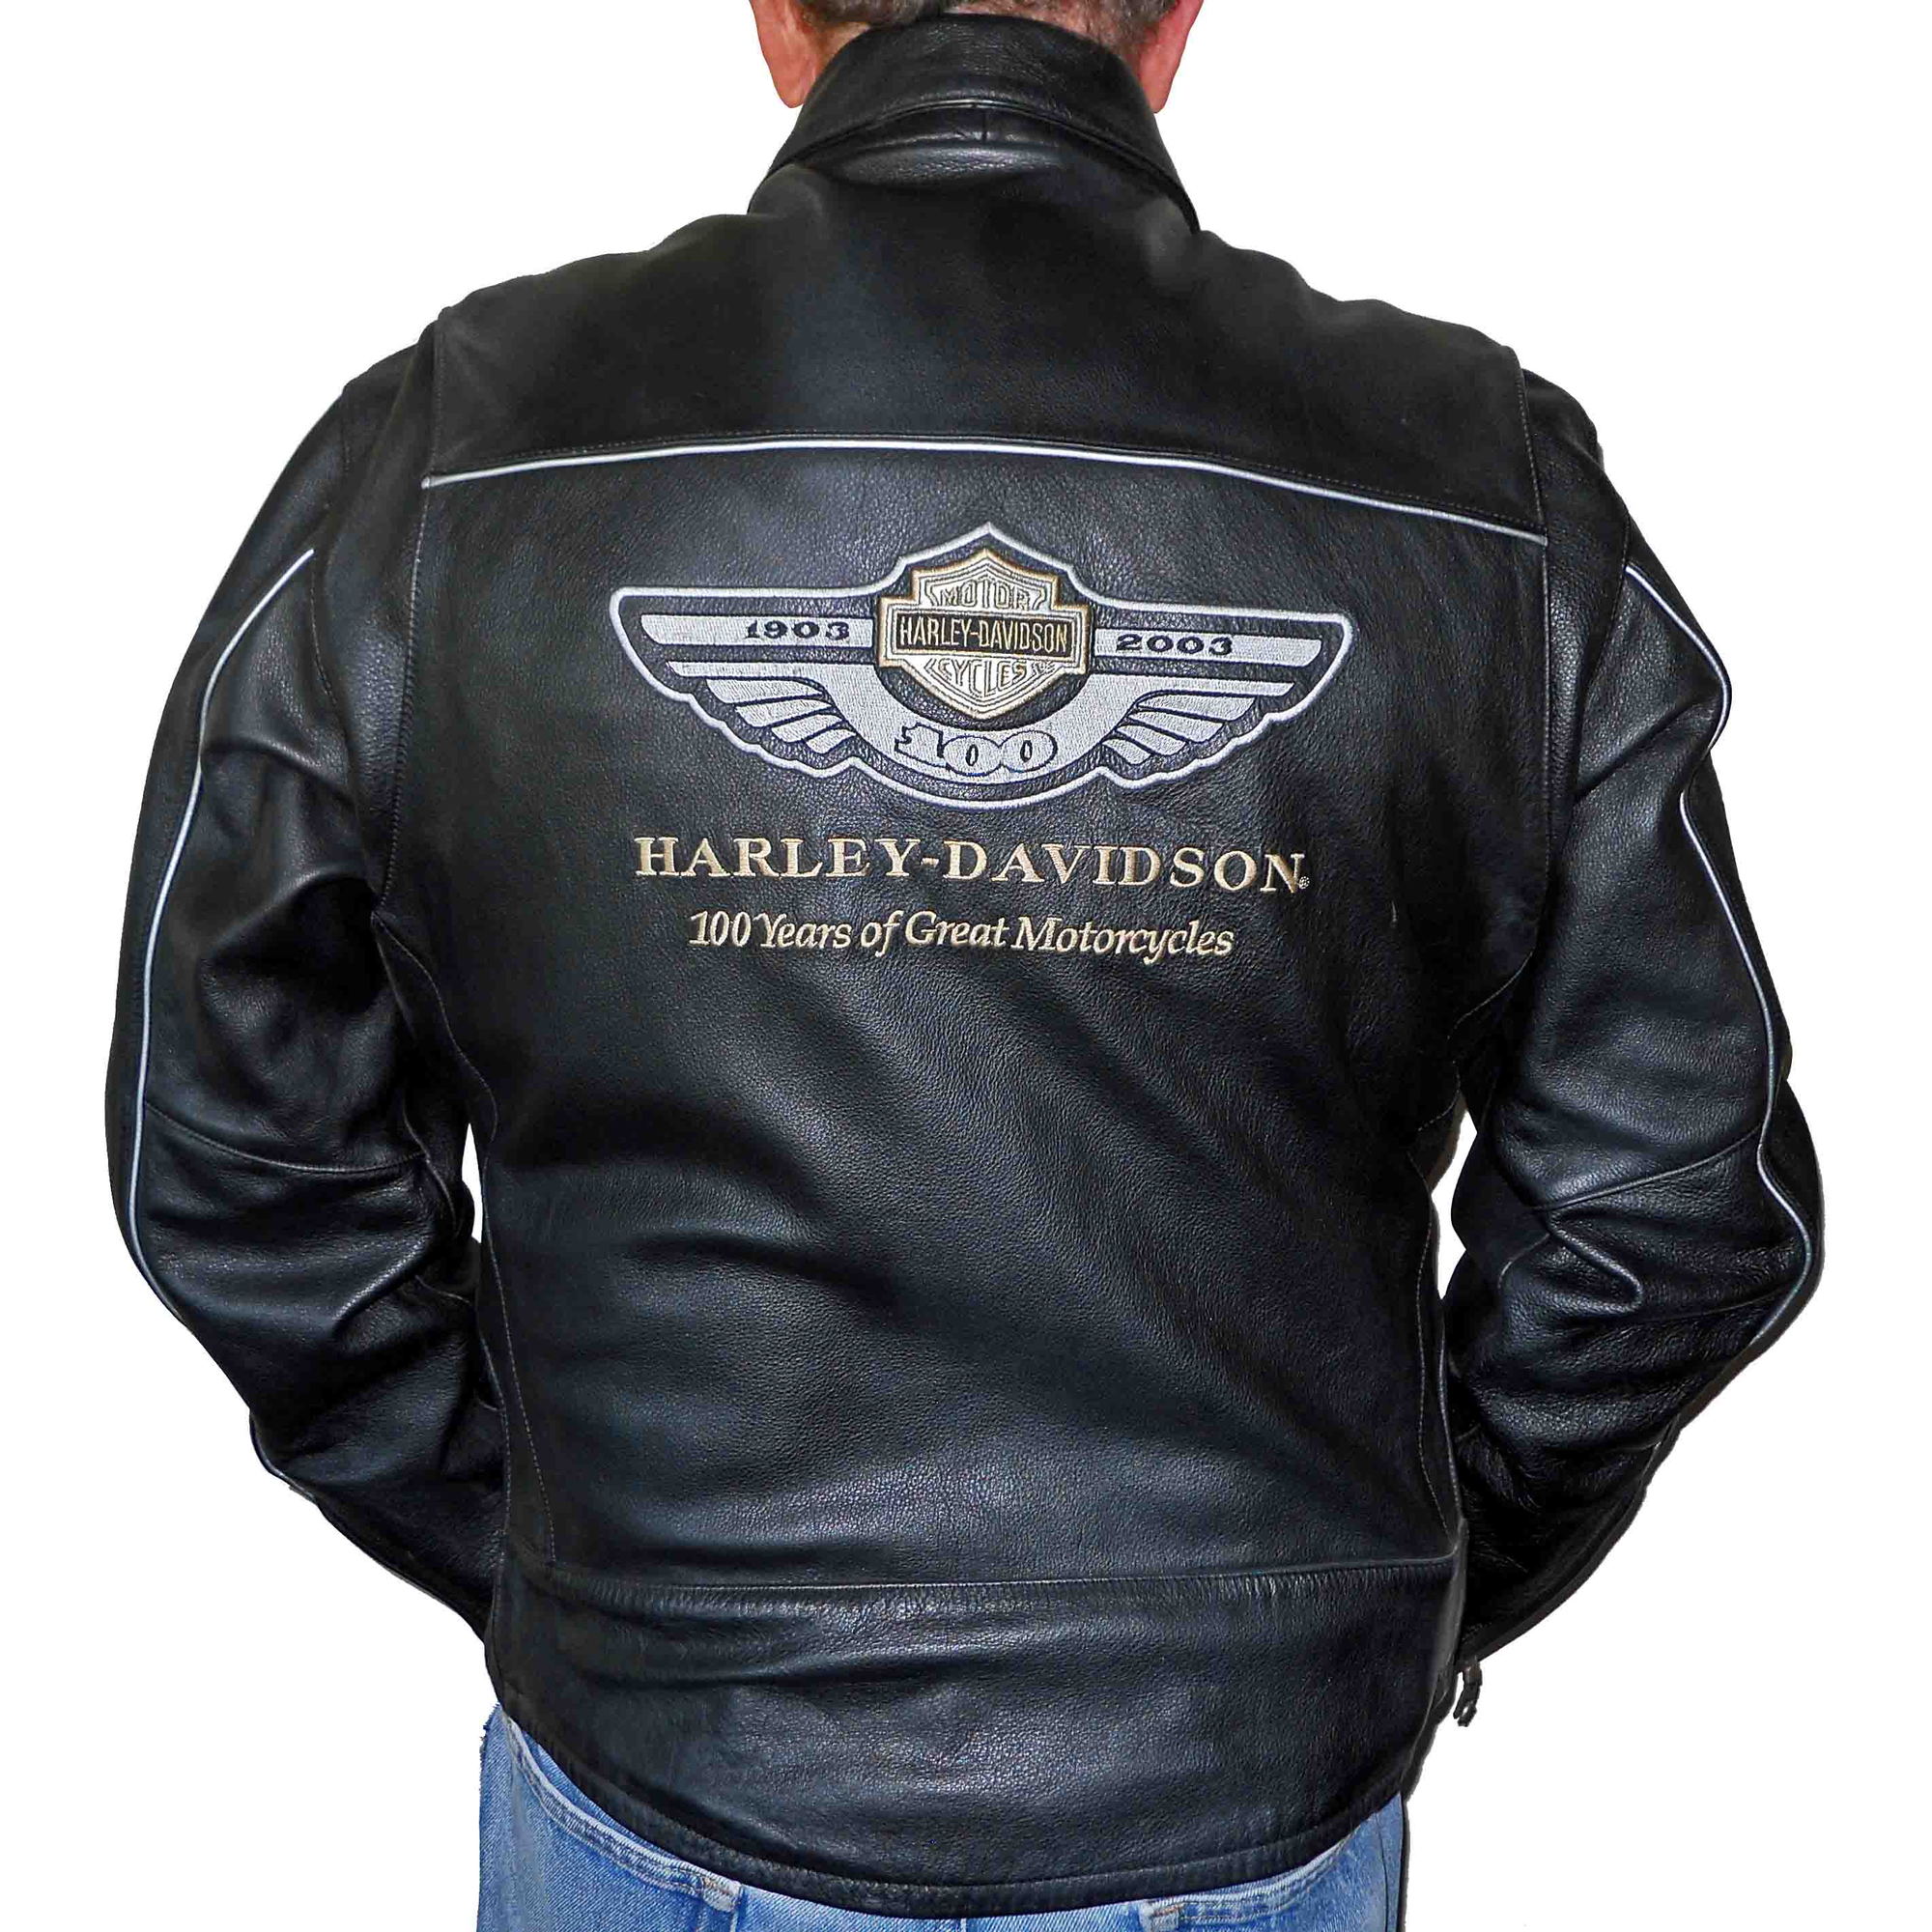 Harley, 100th Anniversary, Leather Jacket, New $200 - Harley Davidson ...